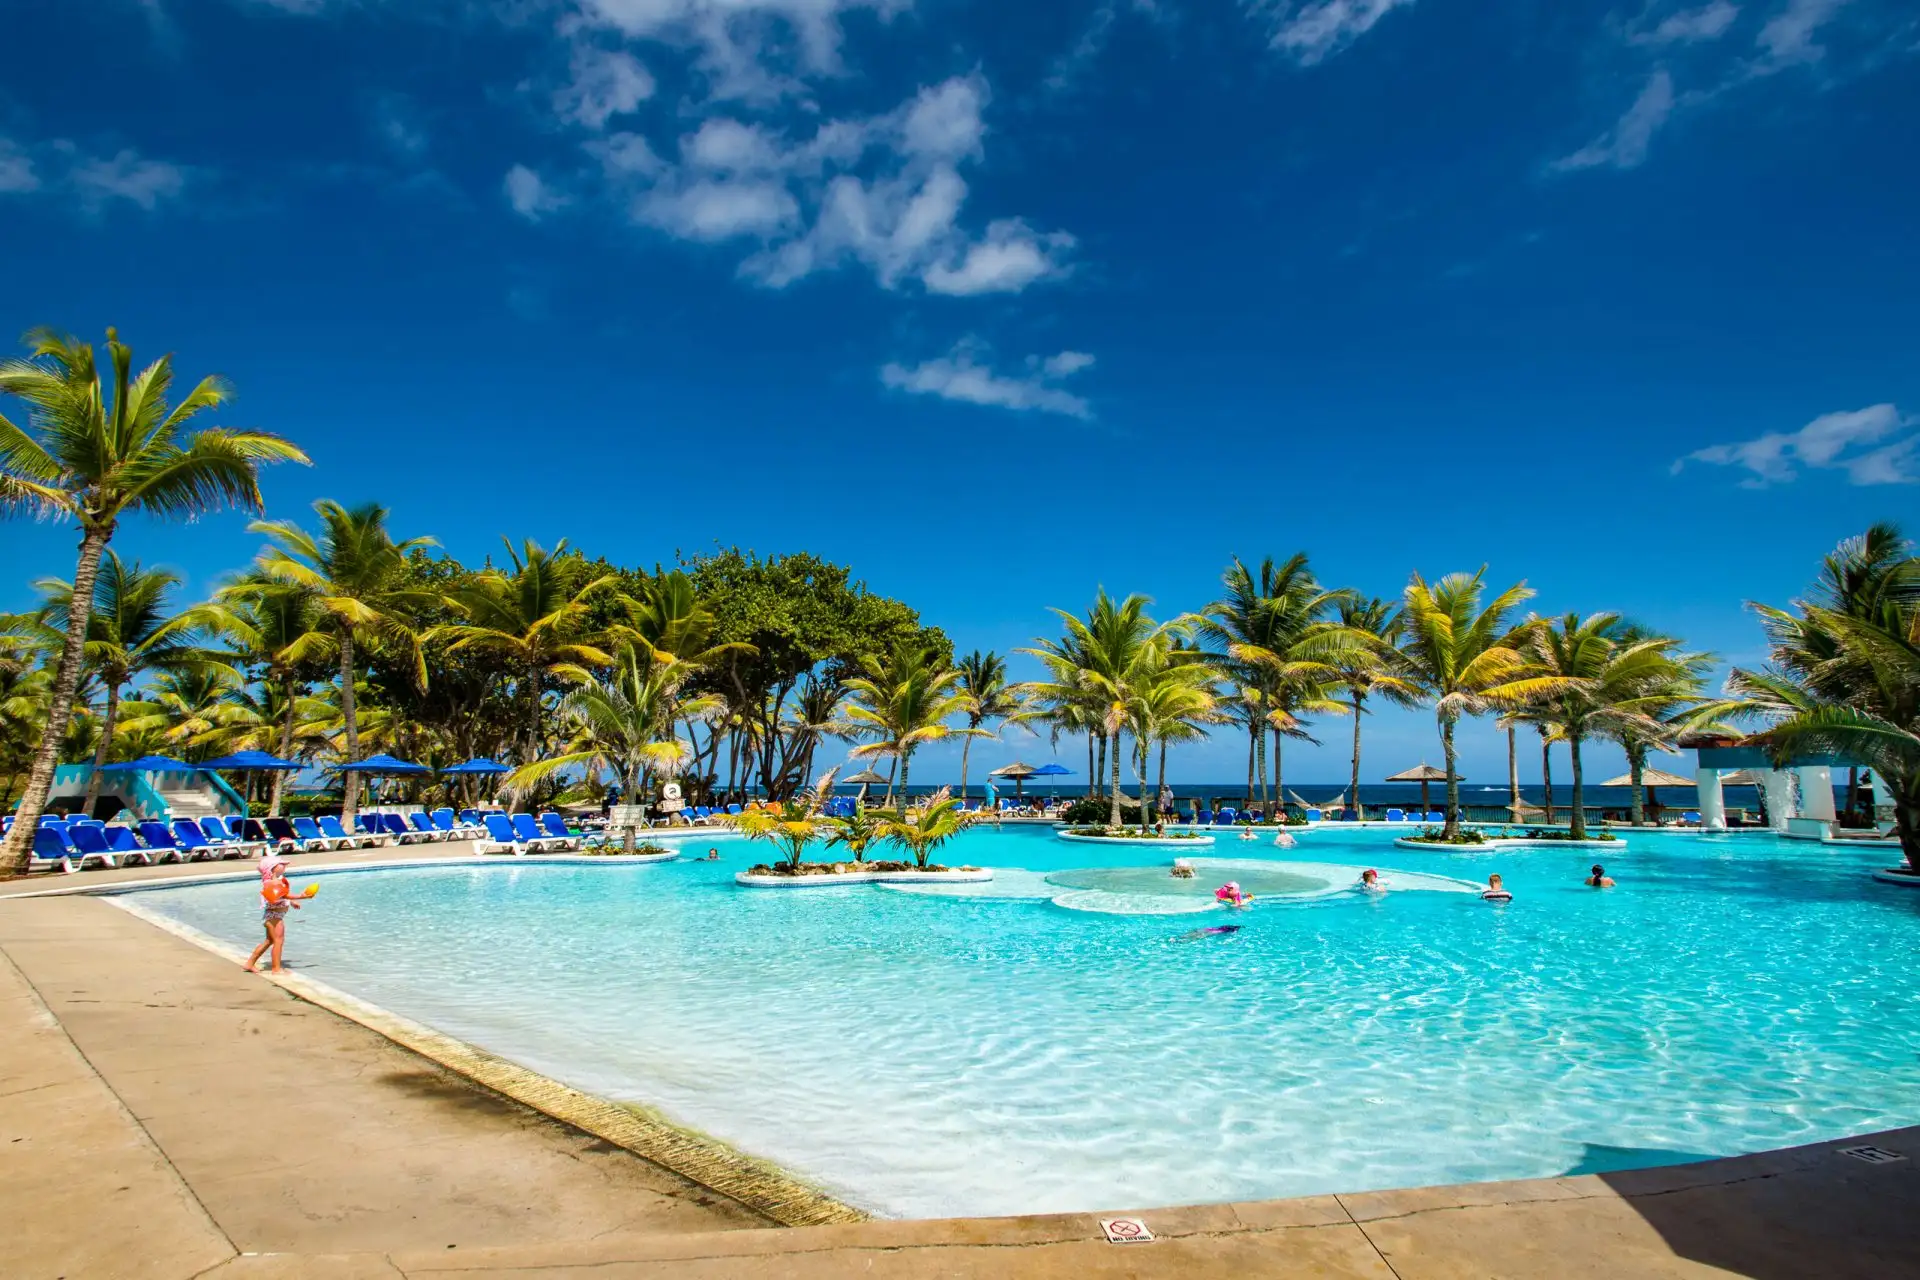 Pool at Coconut Bay Beach Resort and Spa; Courtesy of Coconut Bay Beach Resort and Spa